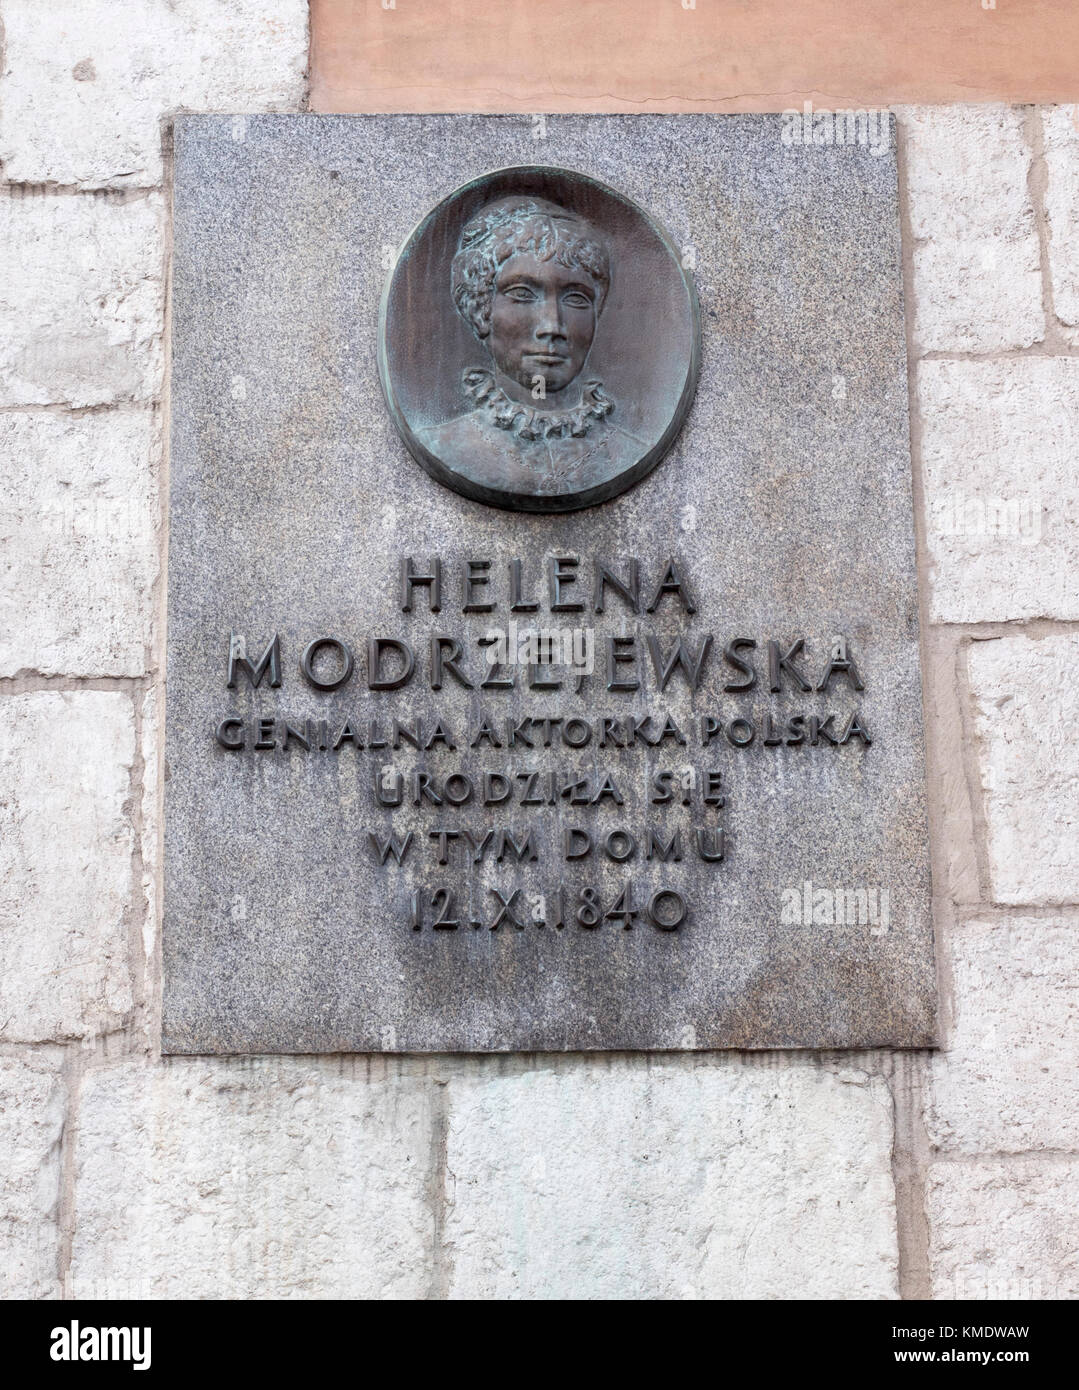 Heritage plaque for Helena Modrzejewska (true name Jadwiga Helena Misel-Chlapowska) greatest Polish actress, at ul.Grodzka22, Krakow, Poland, Europe, Stock Photo